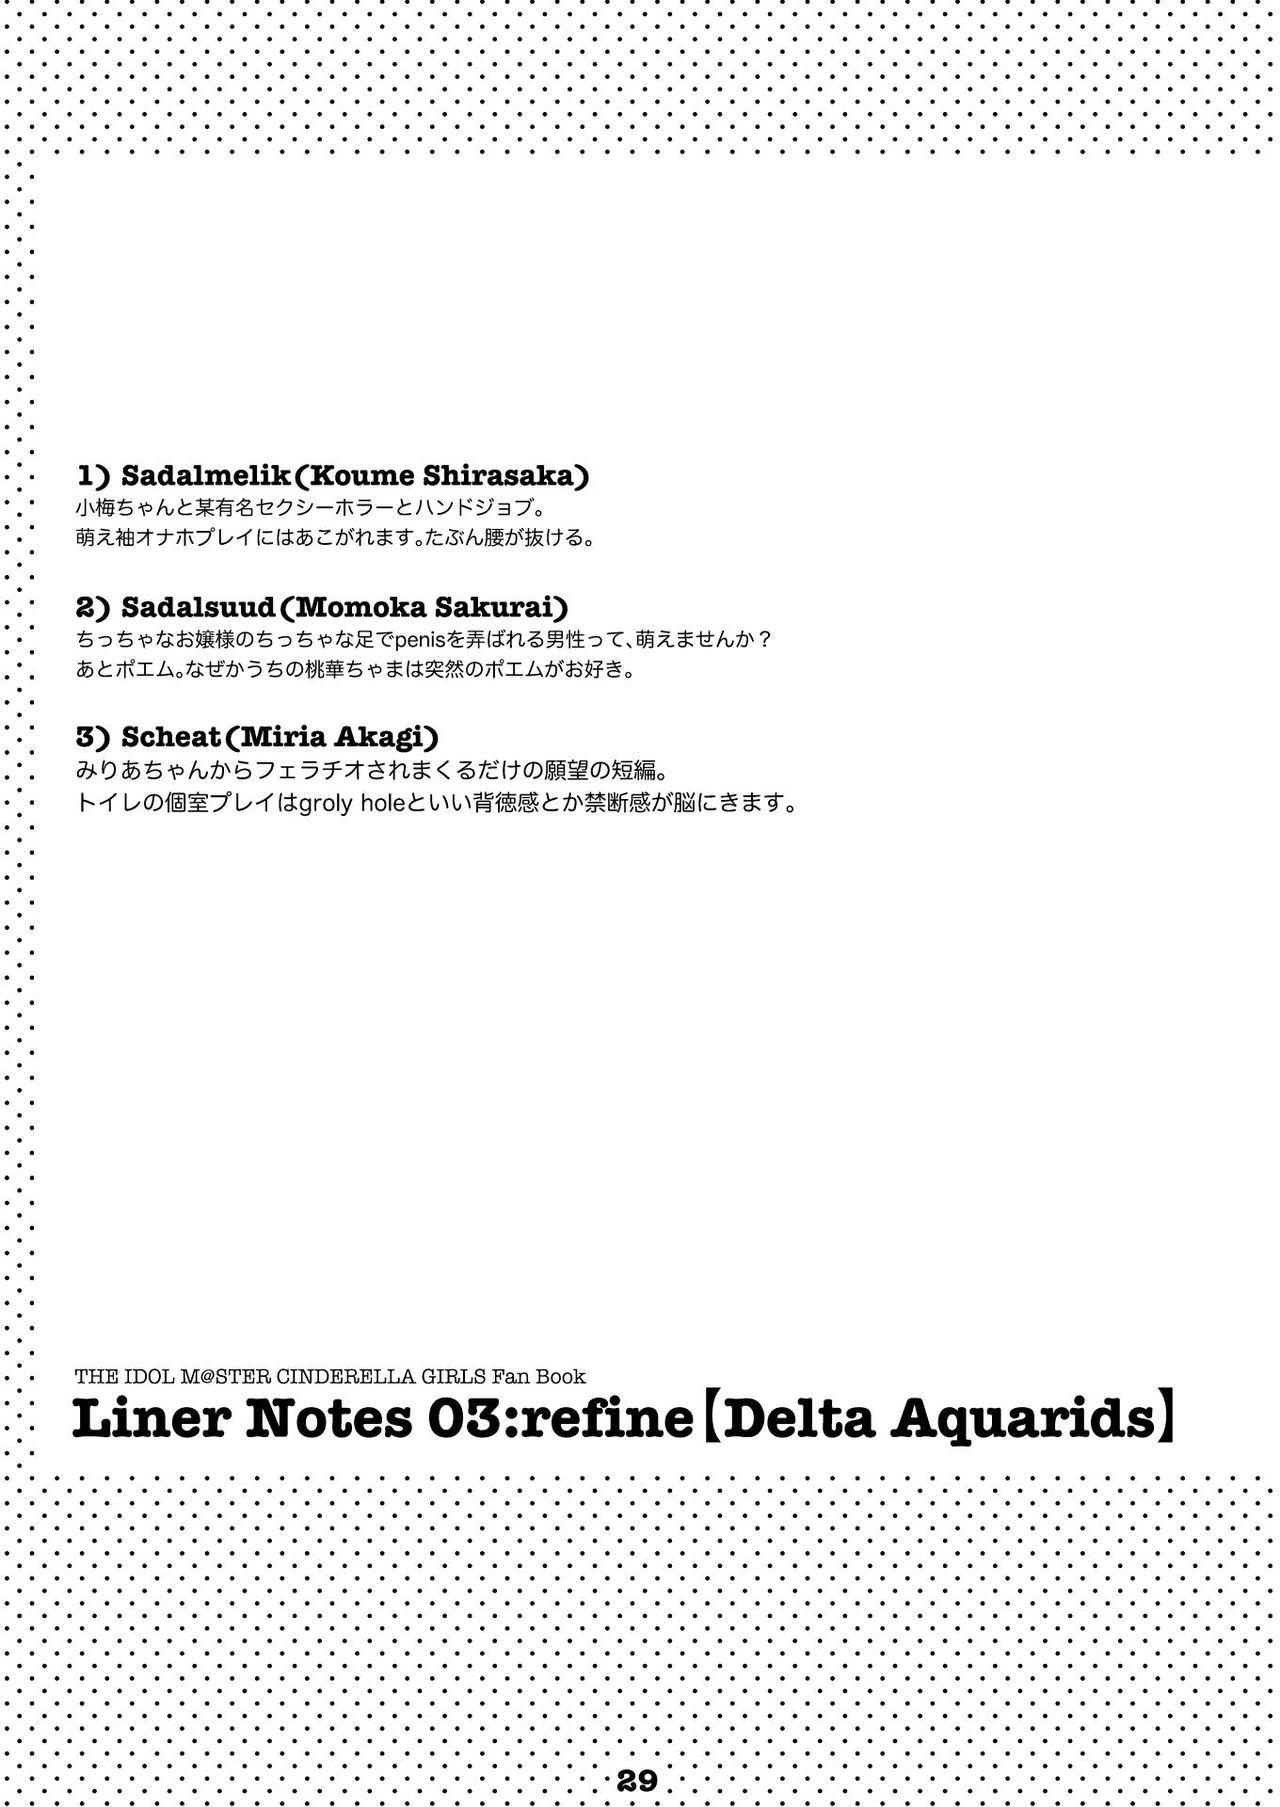 Liner Notes 03 28